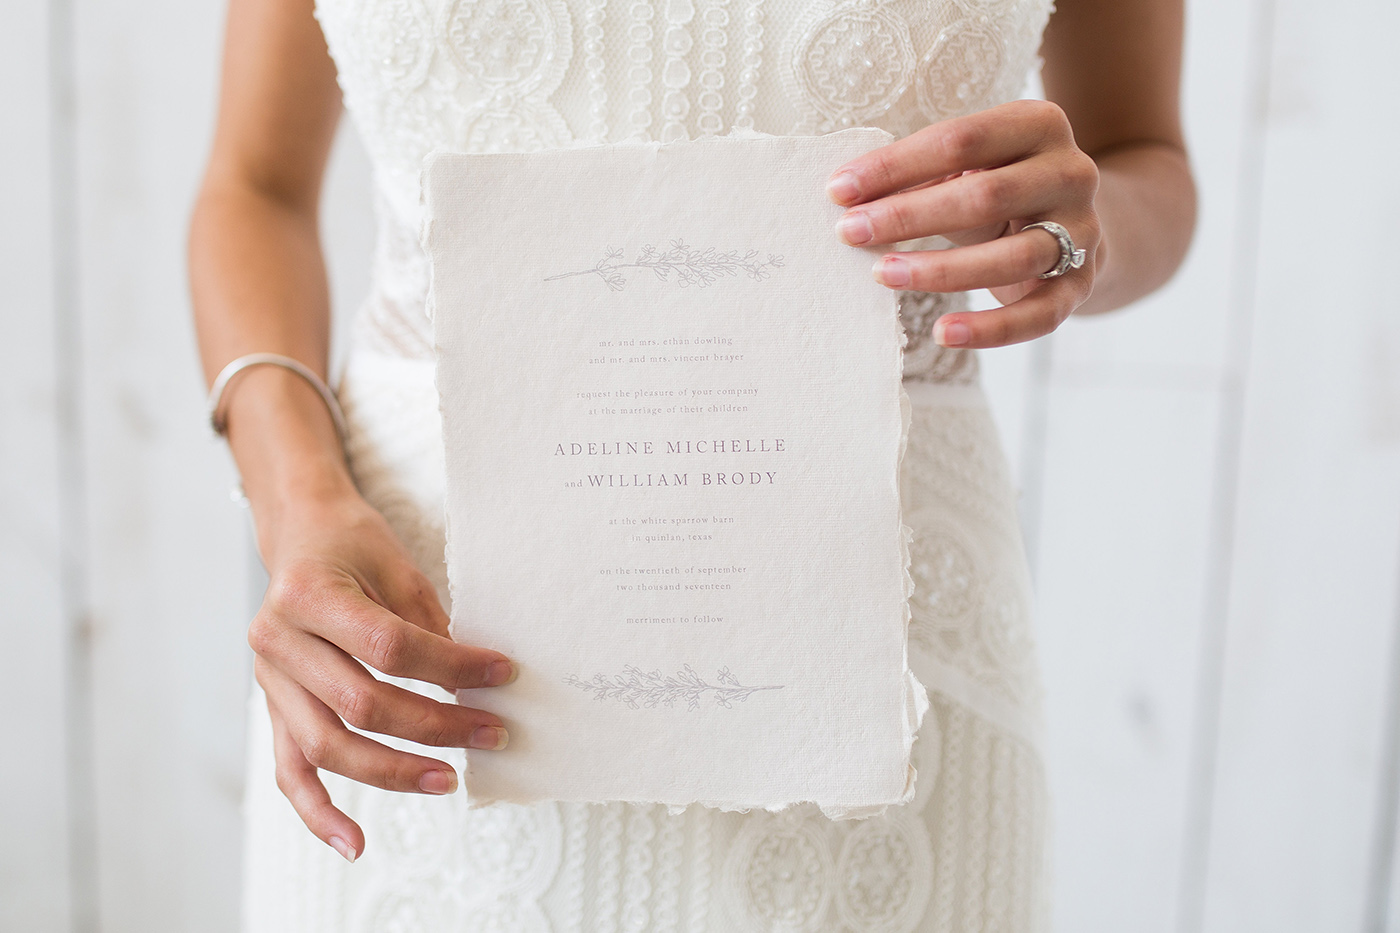 Custom Designed Wedding Invitations: Why Invest? // Sarah Ann Design